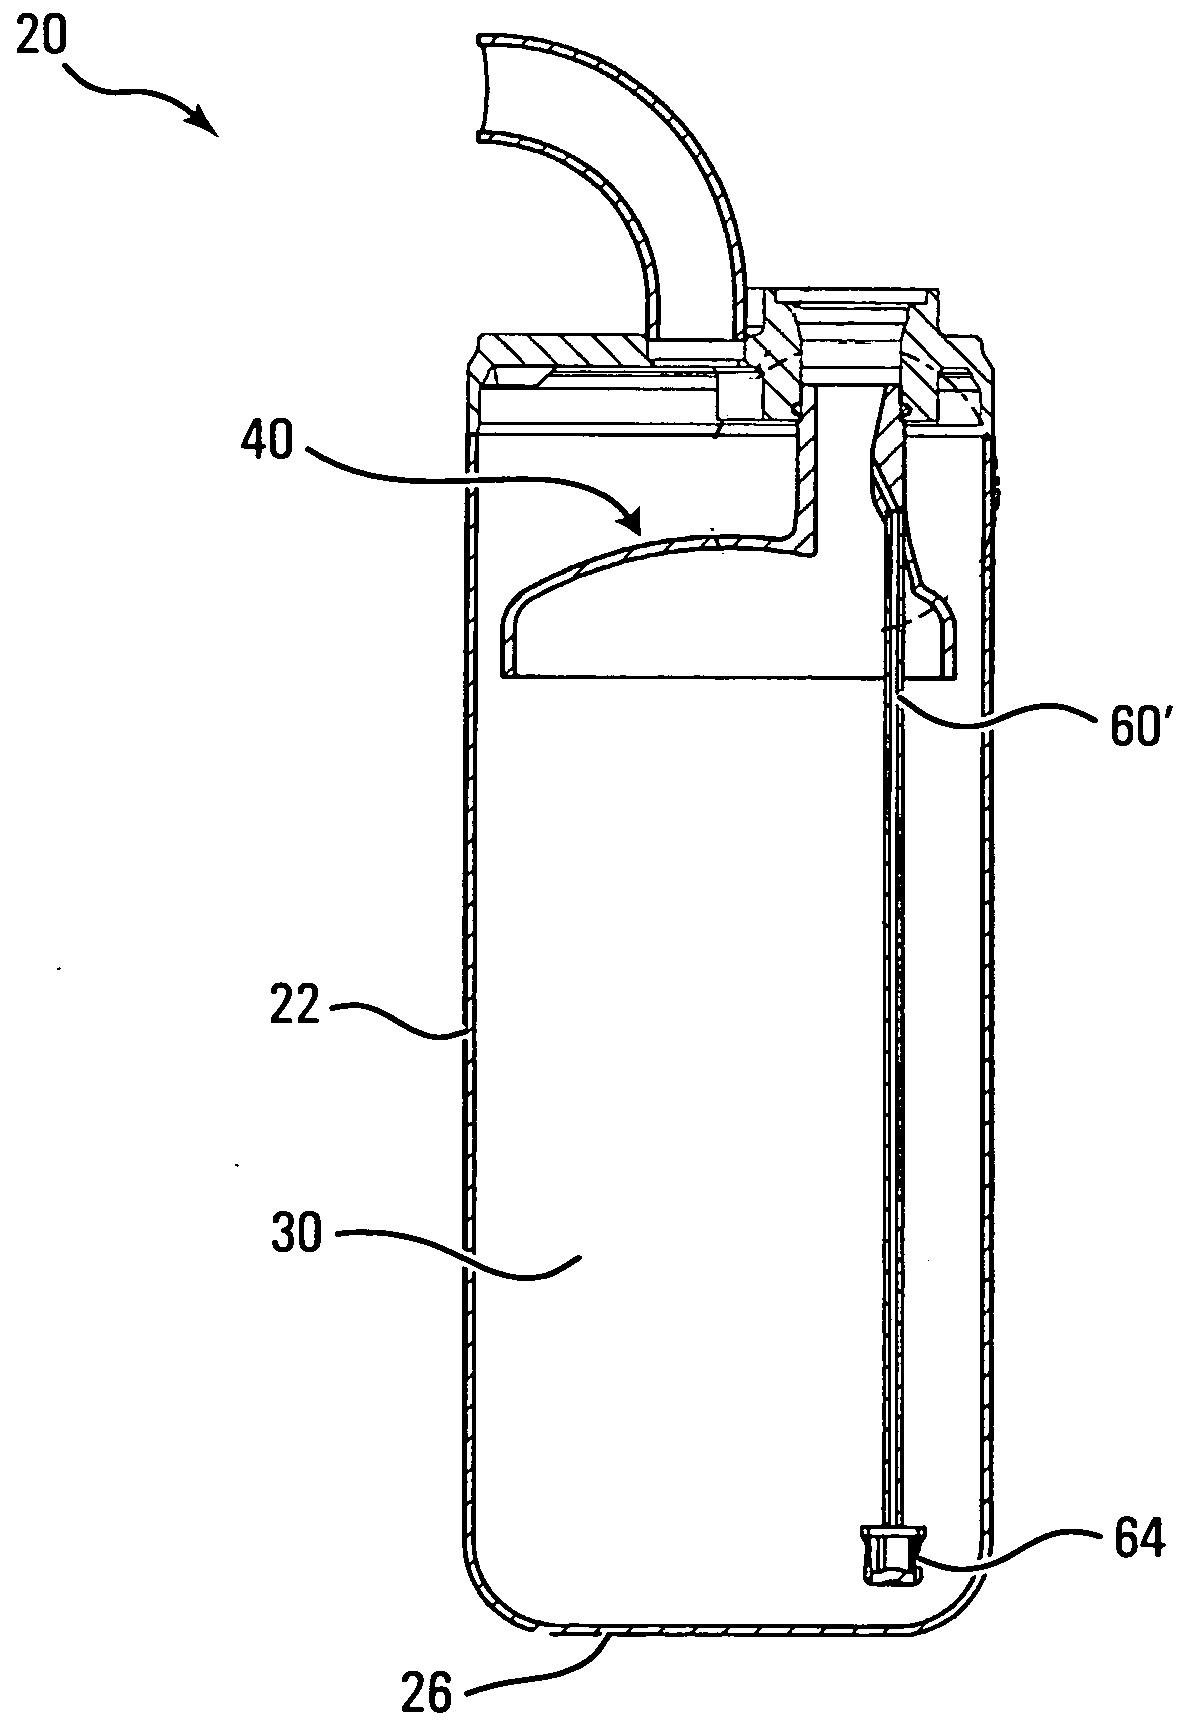 Accumulator with pickup tube